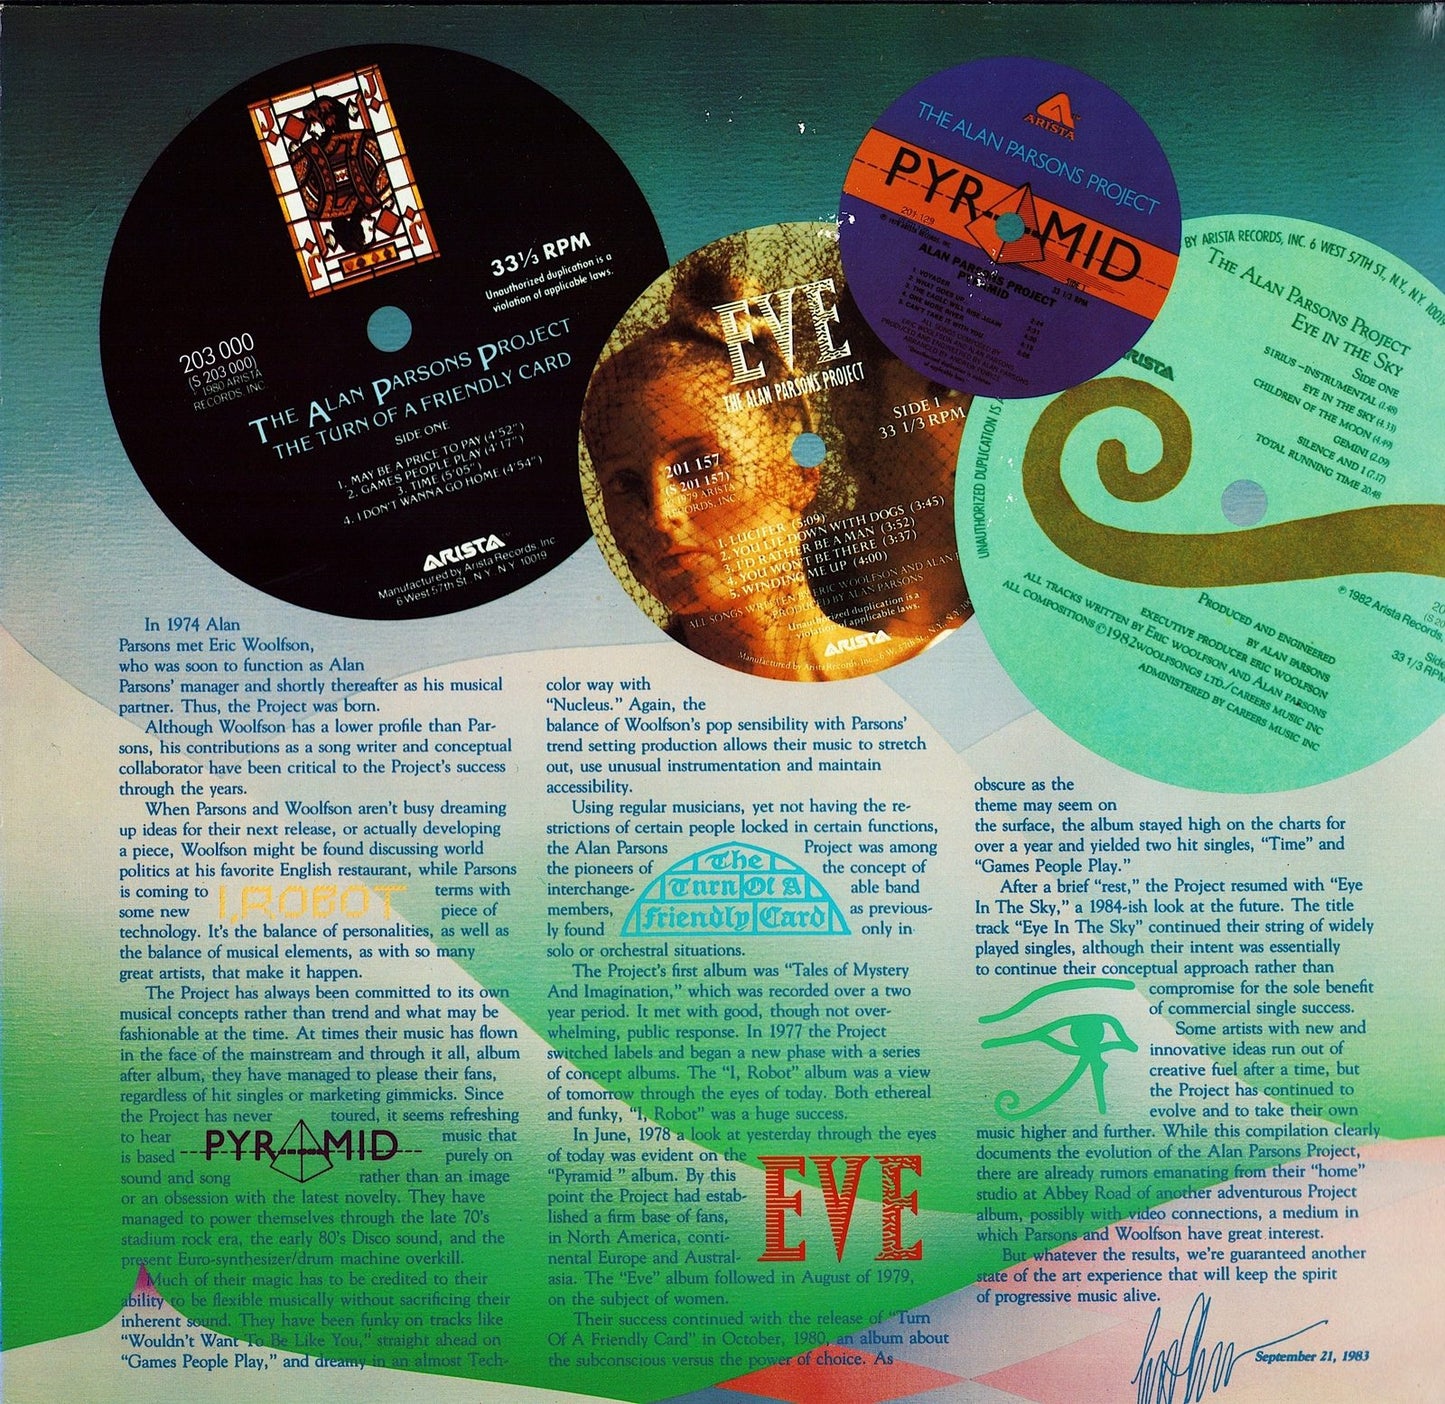 The Alan Parsons Project ‎– The Best Of The Alan Parsons Project Vinyl LP